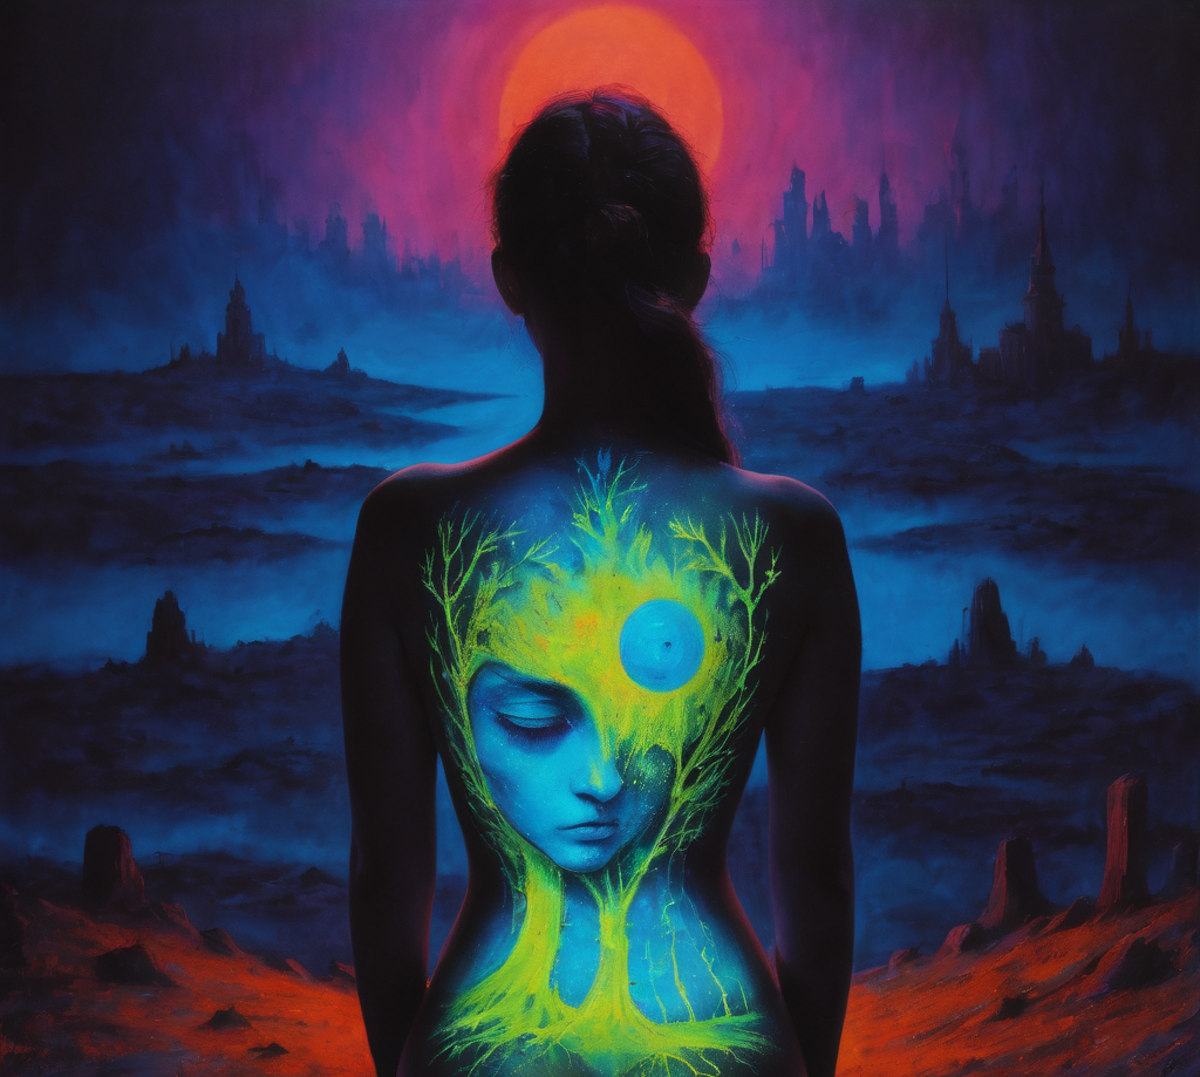 blacklight uv painted on the back of a girl depicting art in the style of Zdzislaw Beksinski 